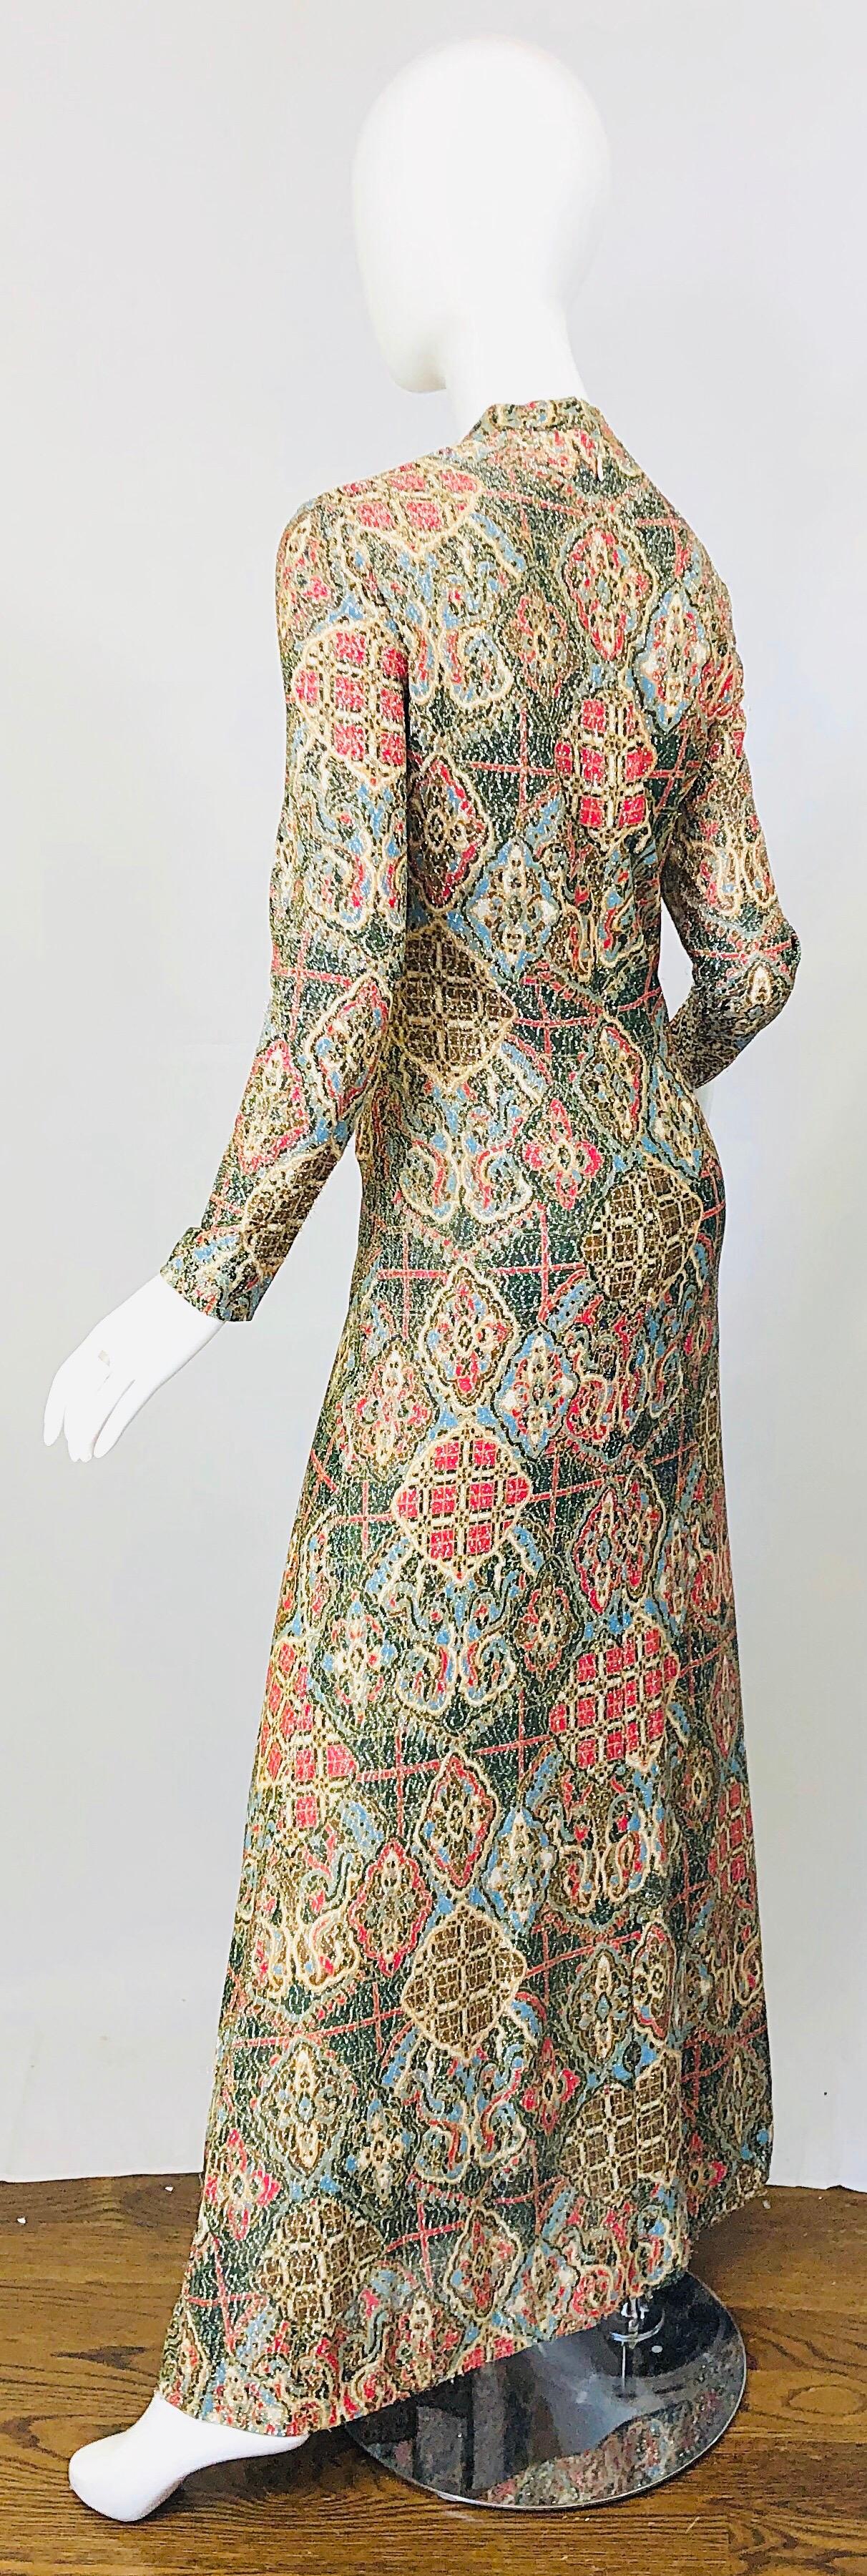 1970s Adele Simpson Lurex Silk Metallic Baroque Ethnic Print Cheongsam 70s Gown  4